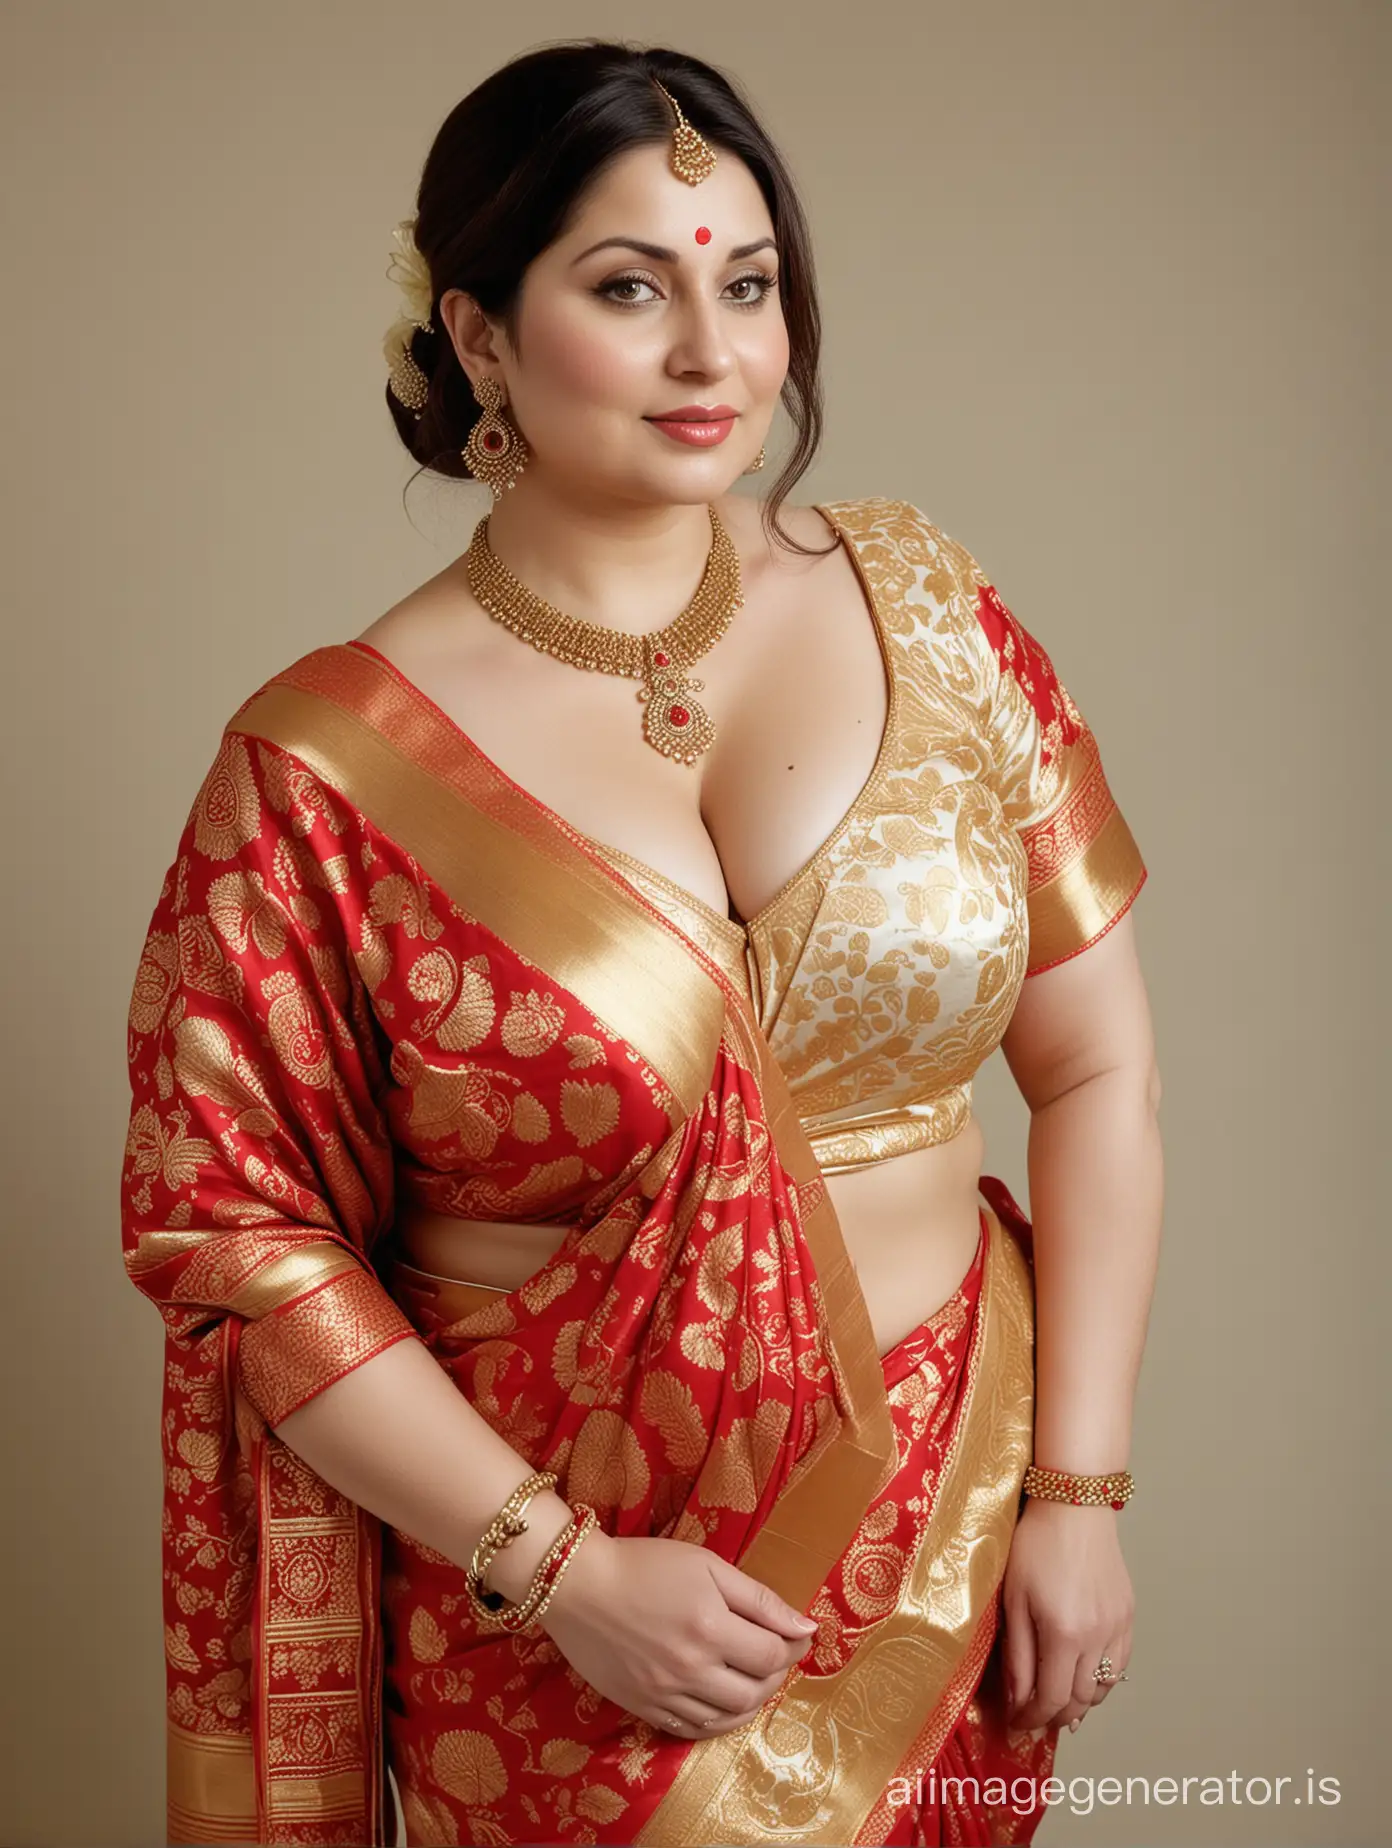 Voluptuous-American-Mature-Woman-in-Banarasi-Saree-and-Traditional-Jewelry